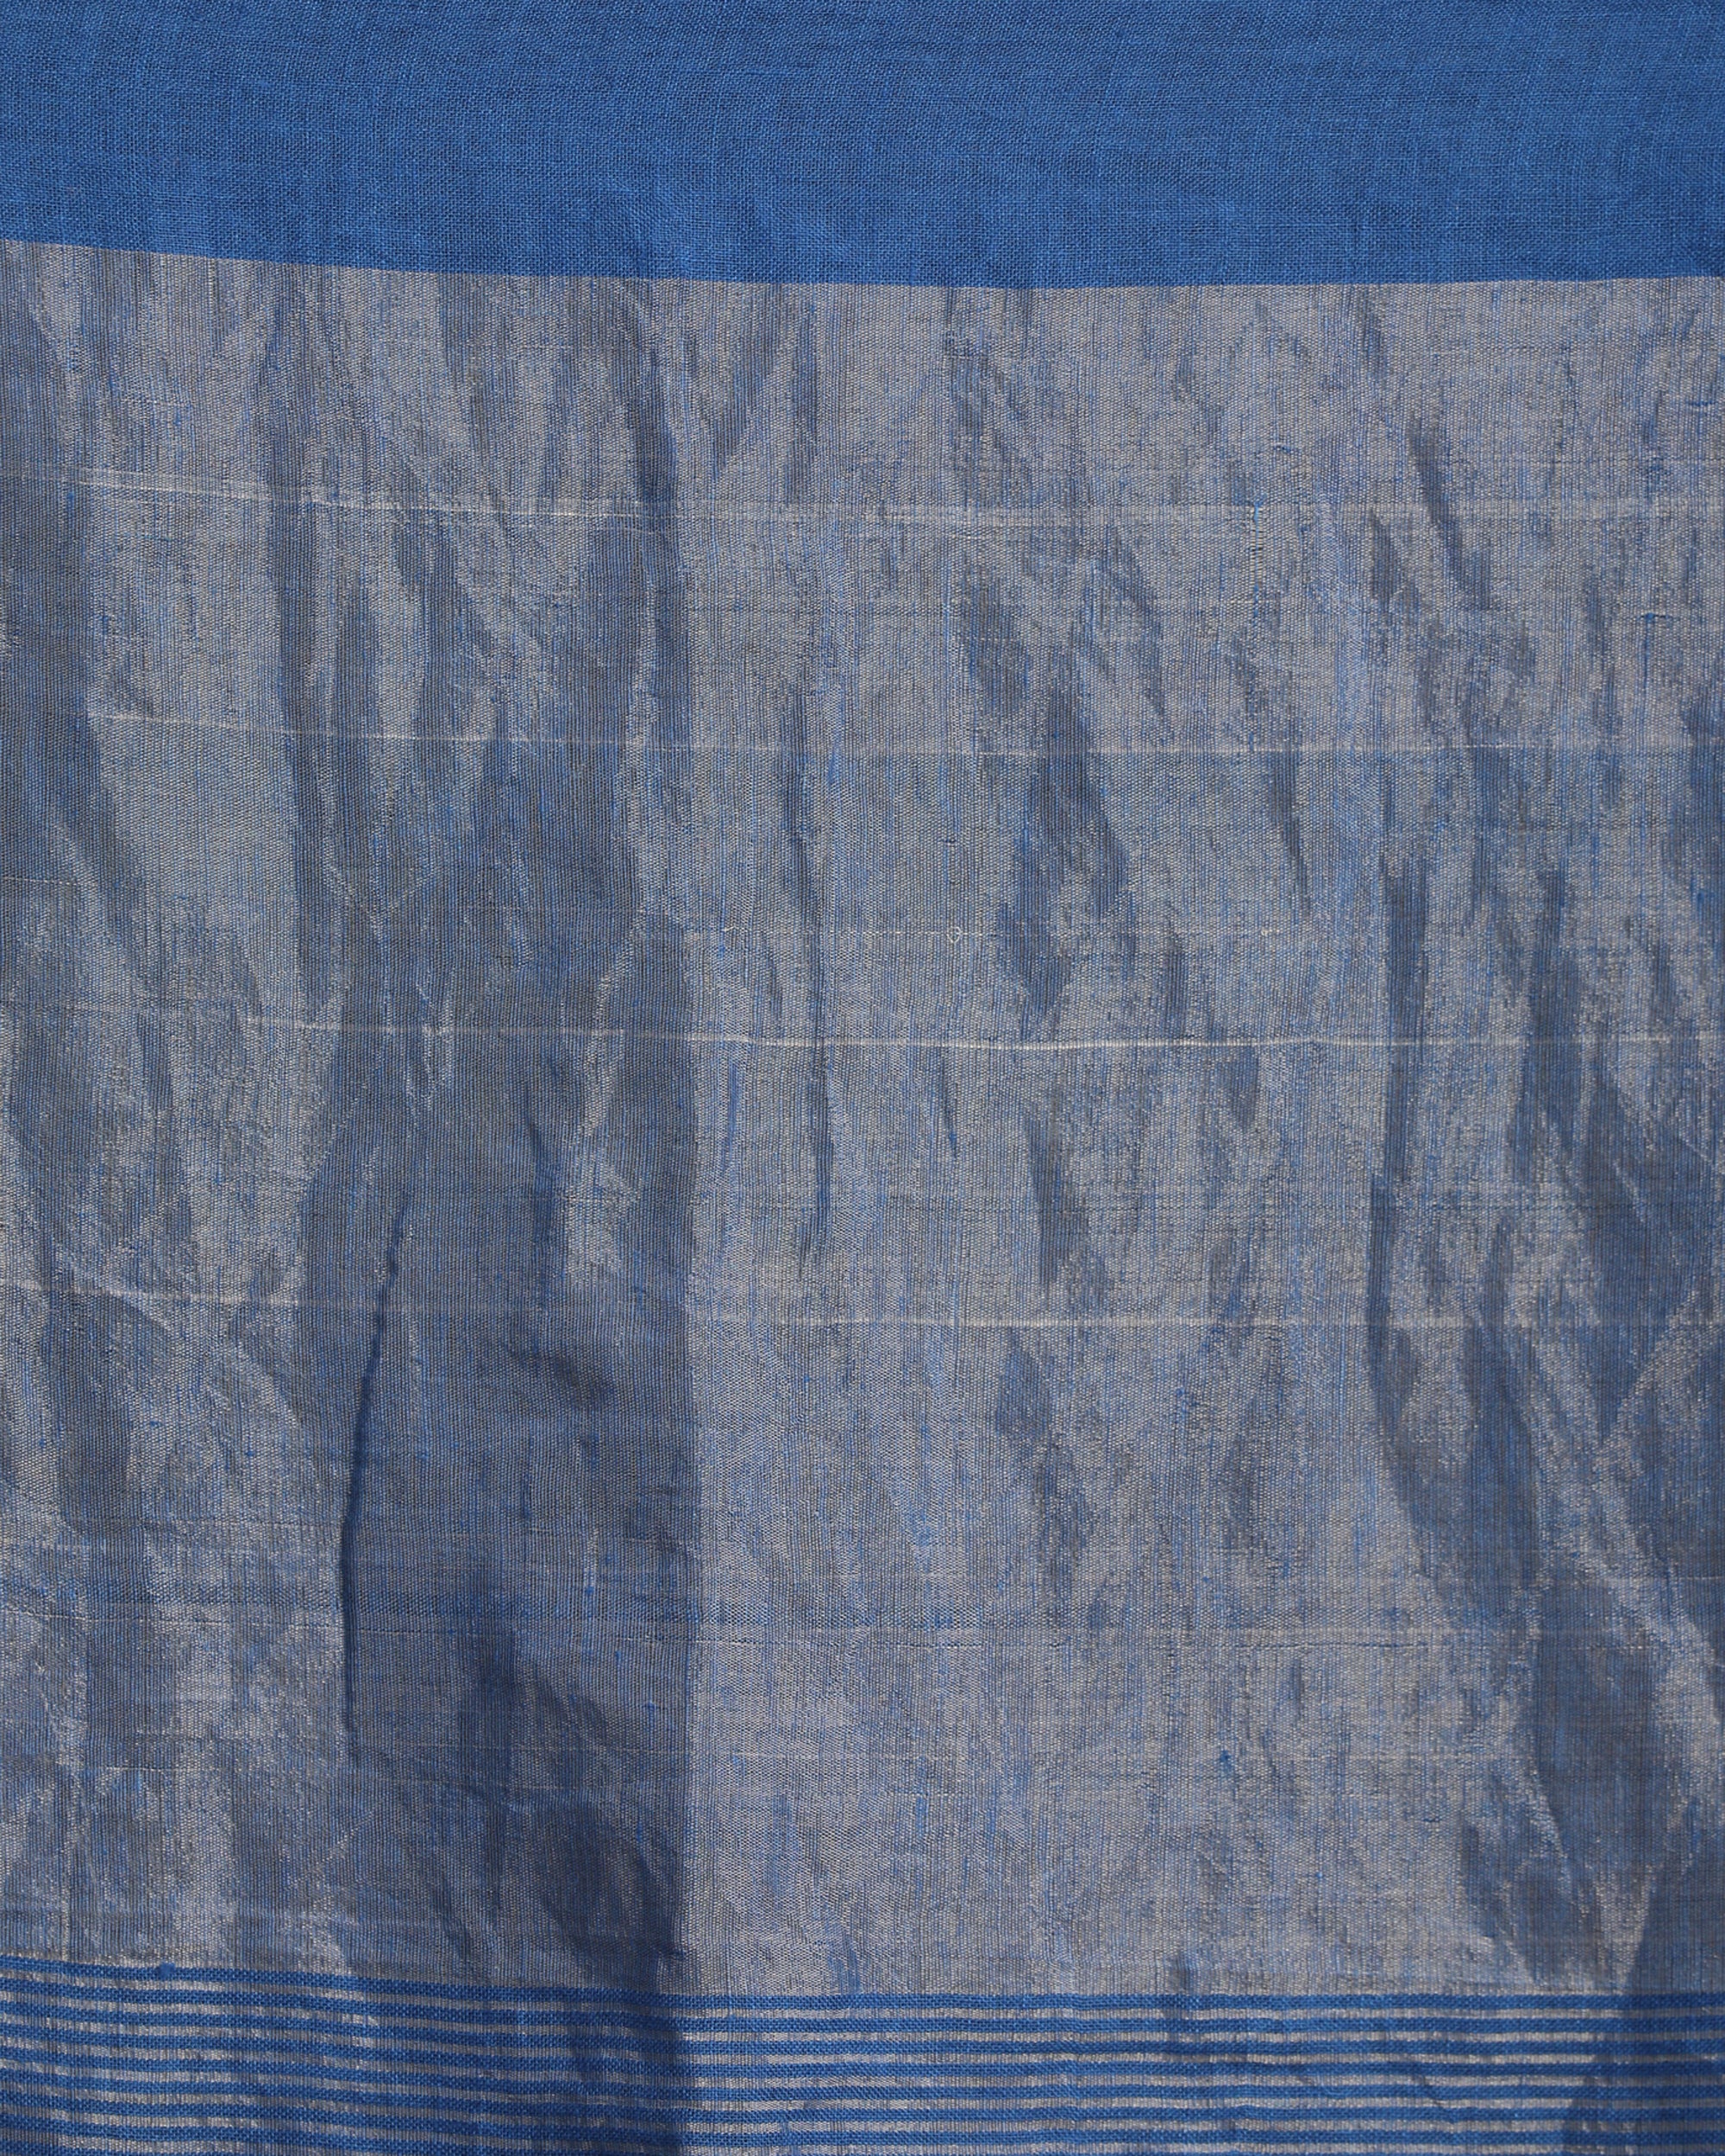 Women's Royel Blue Check Traditional Handloom Linen Saree - Angoshobha